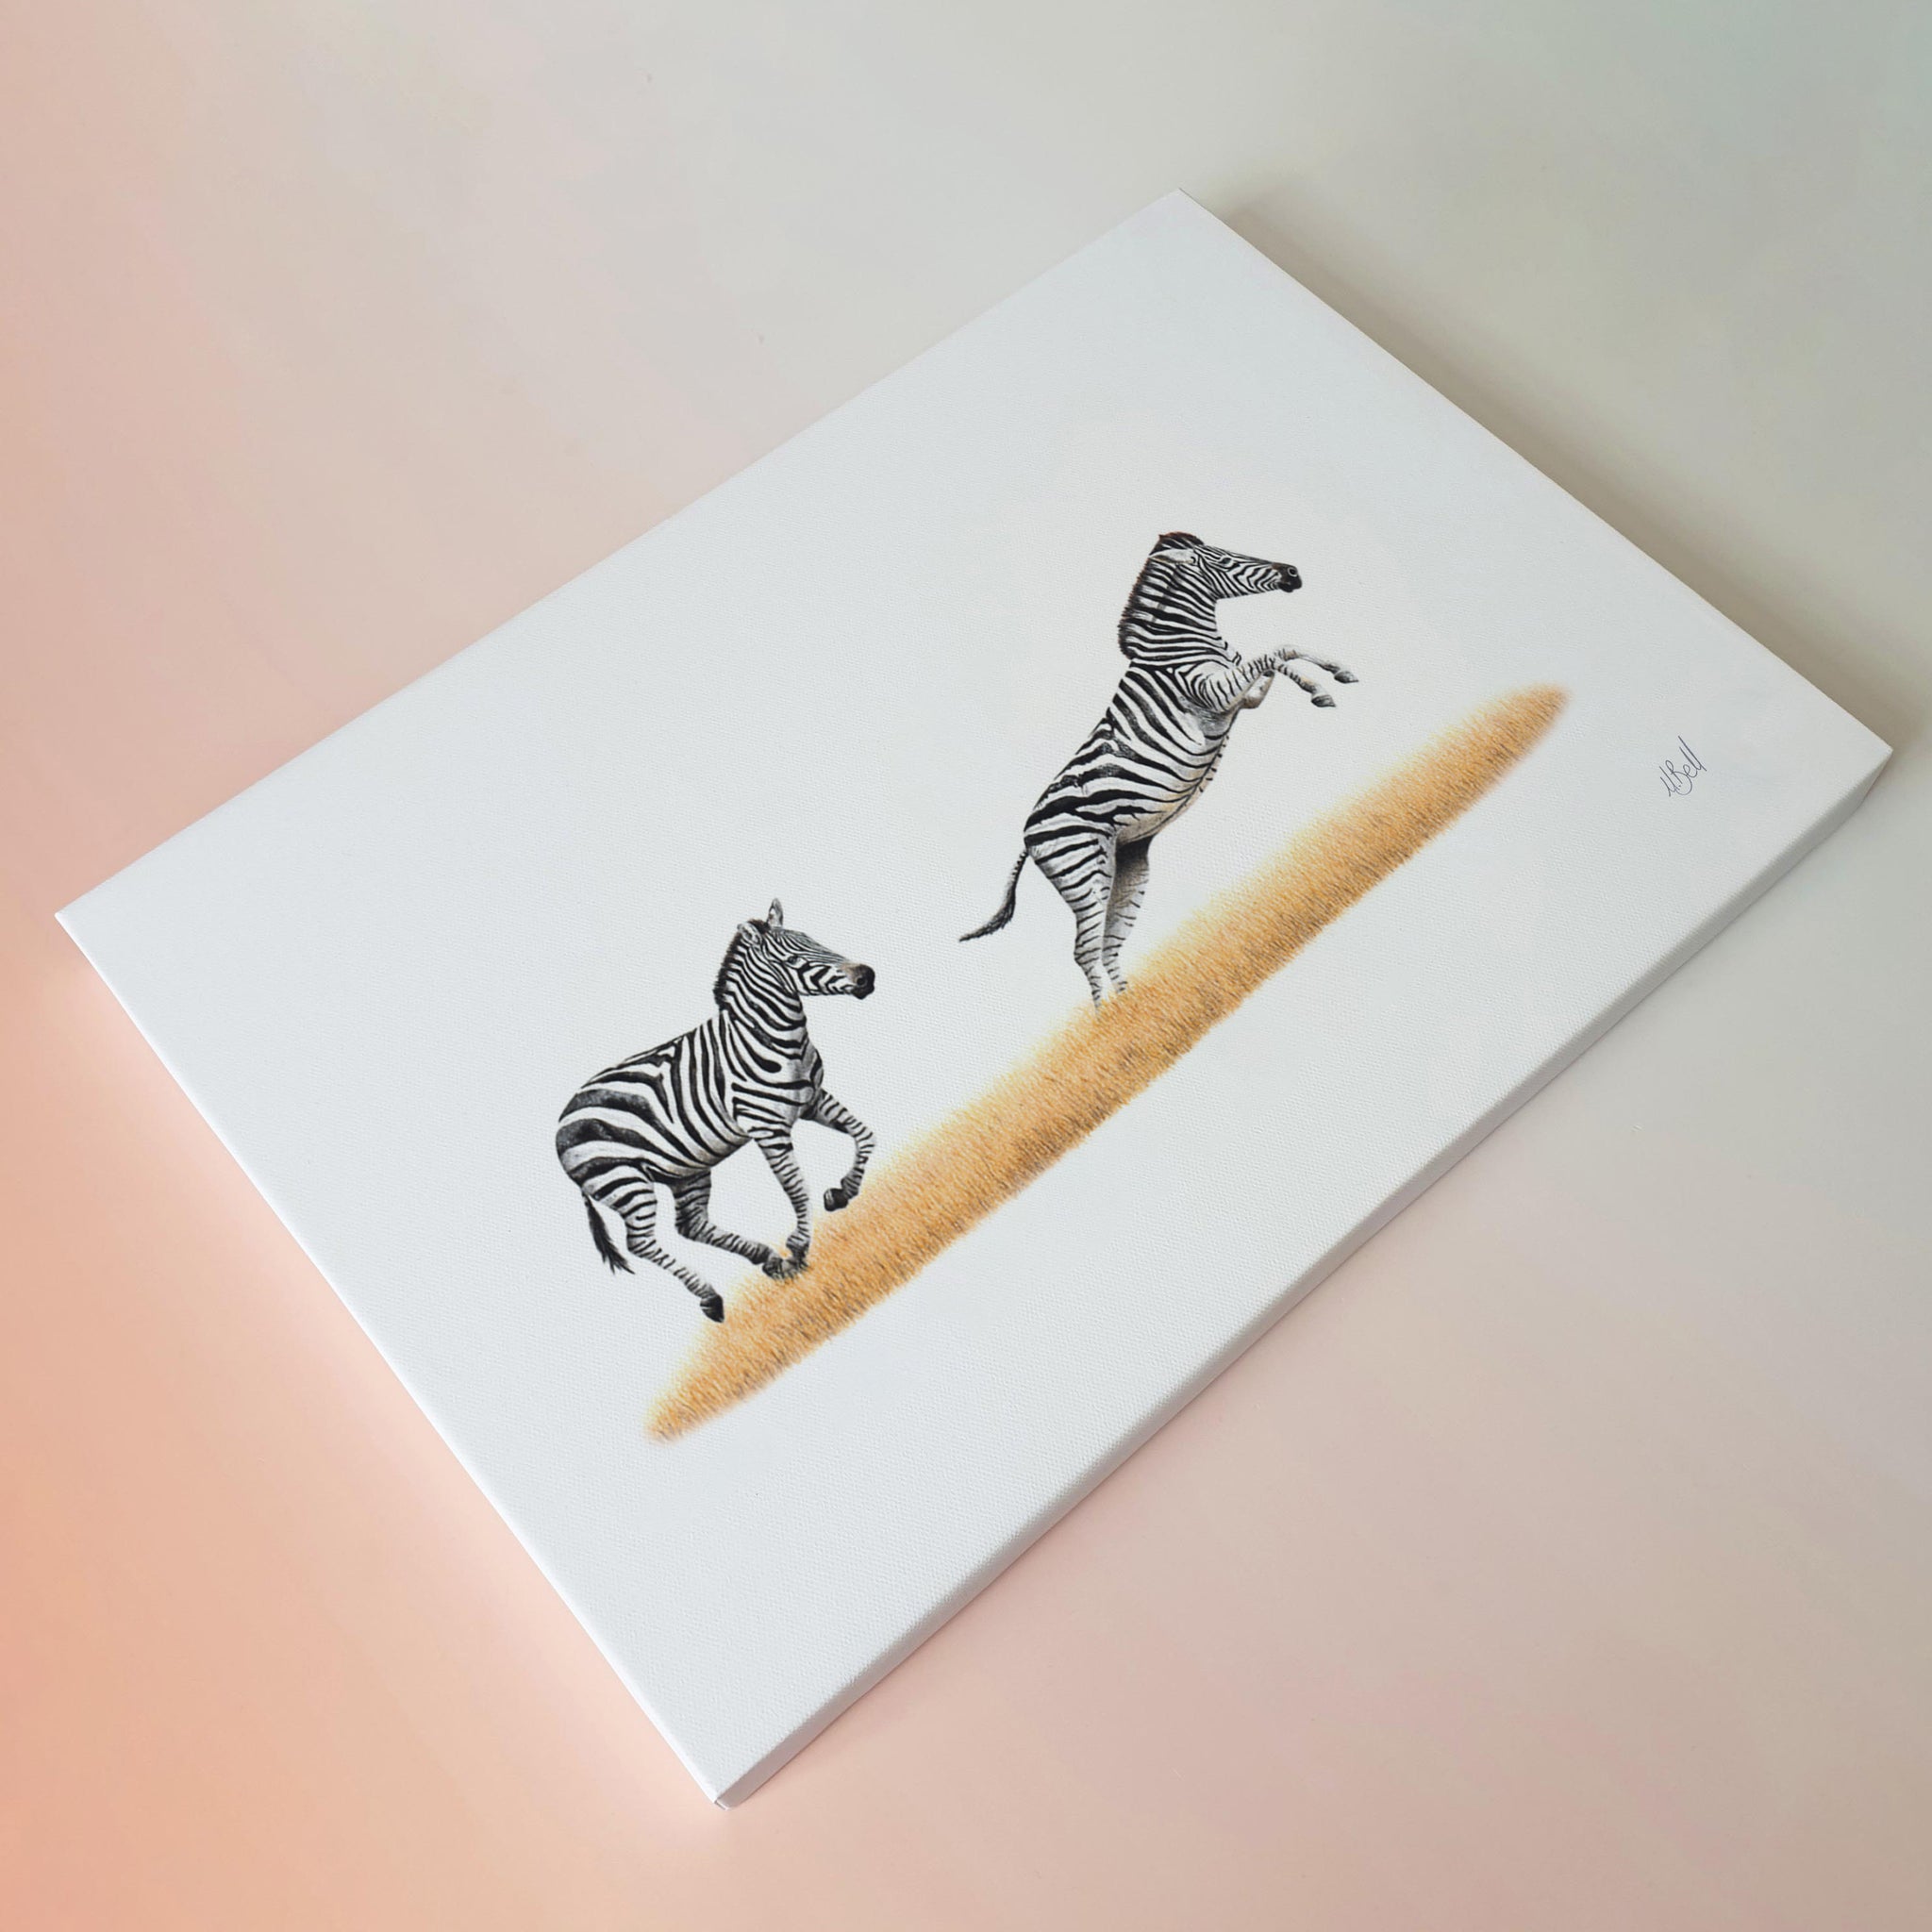 Two zebras running canvas print artwork